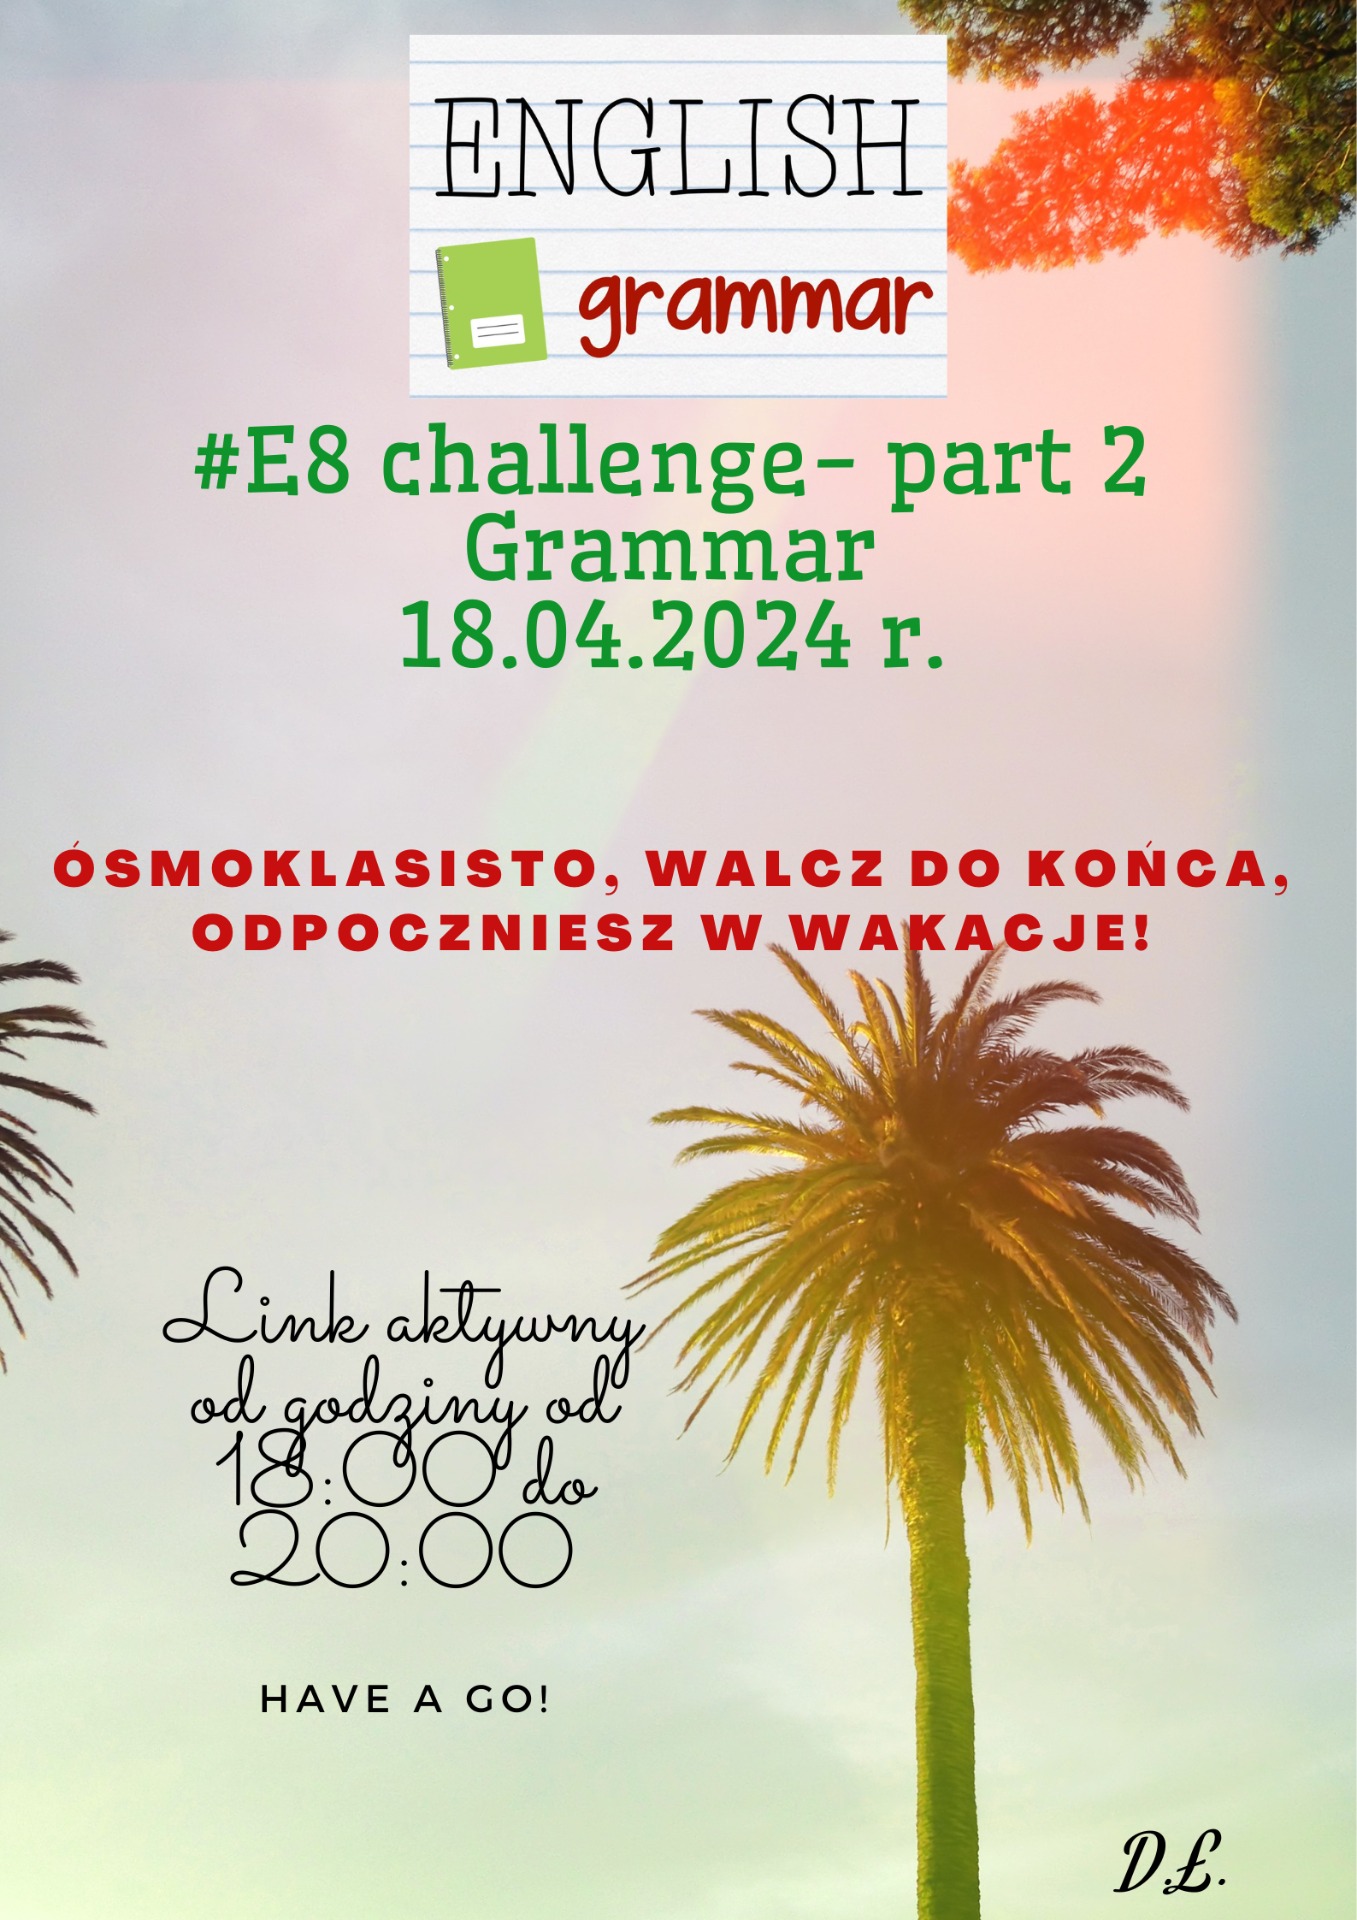 English grammar - part 2 - Obrazek 1